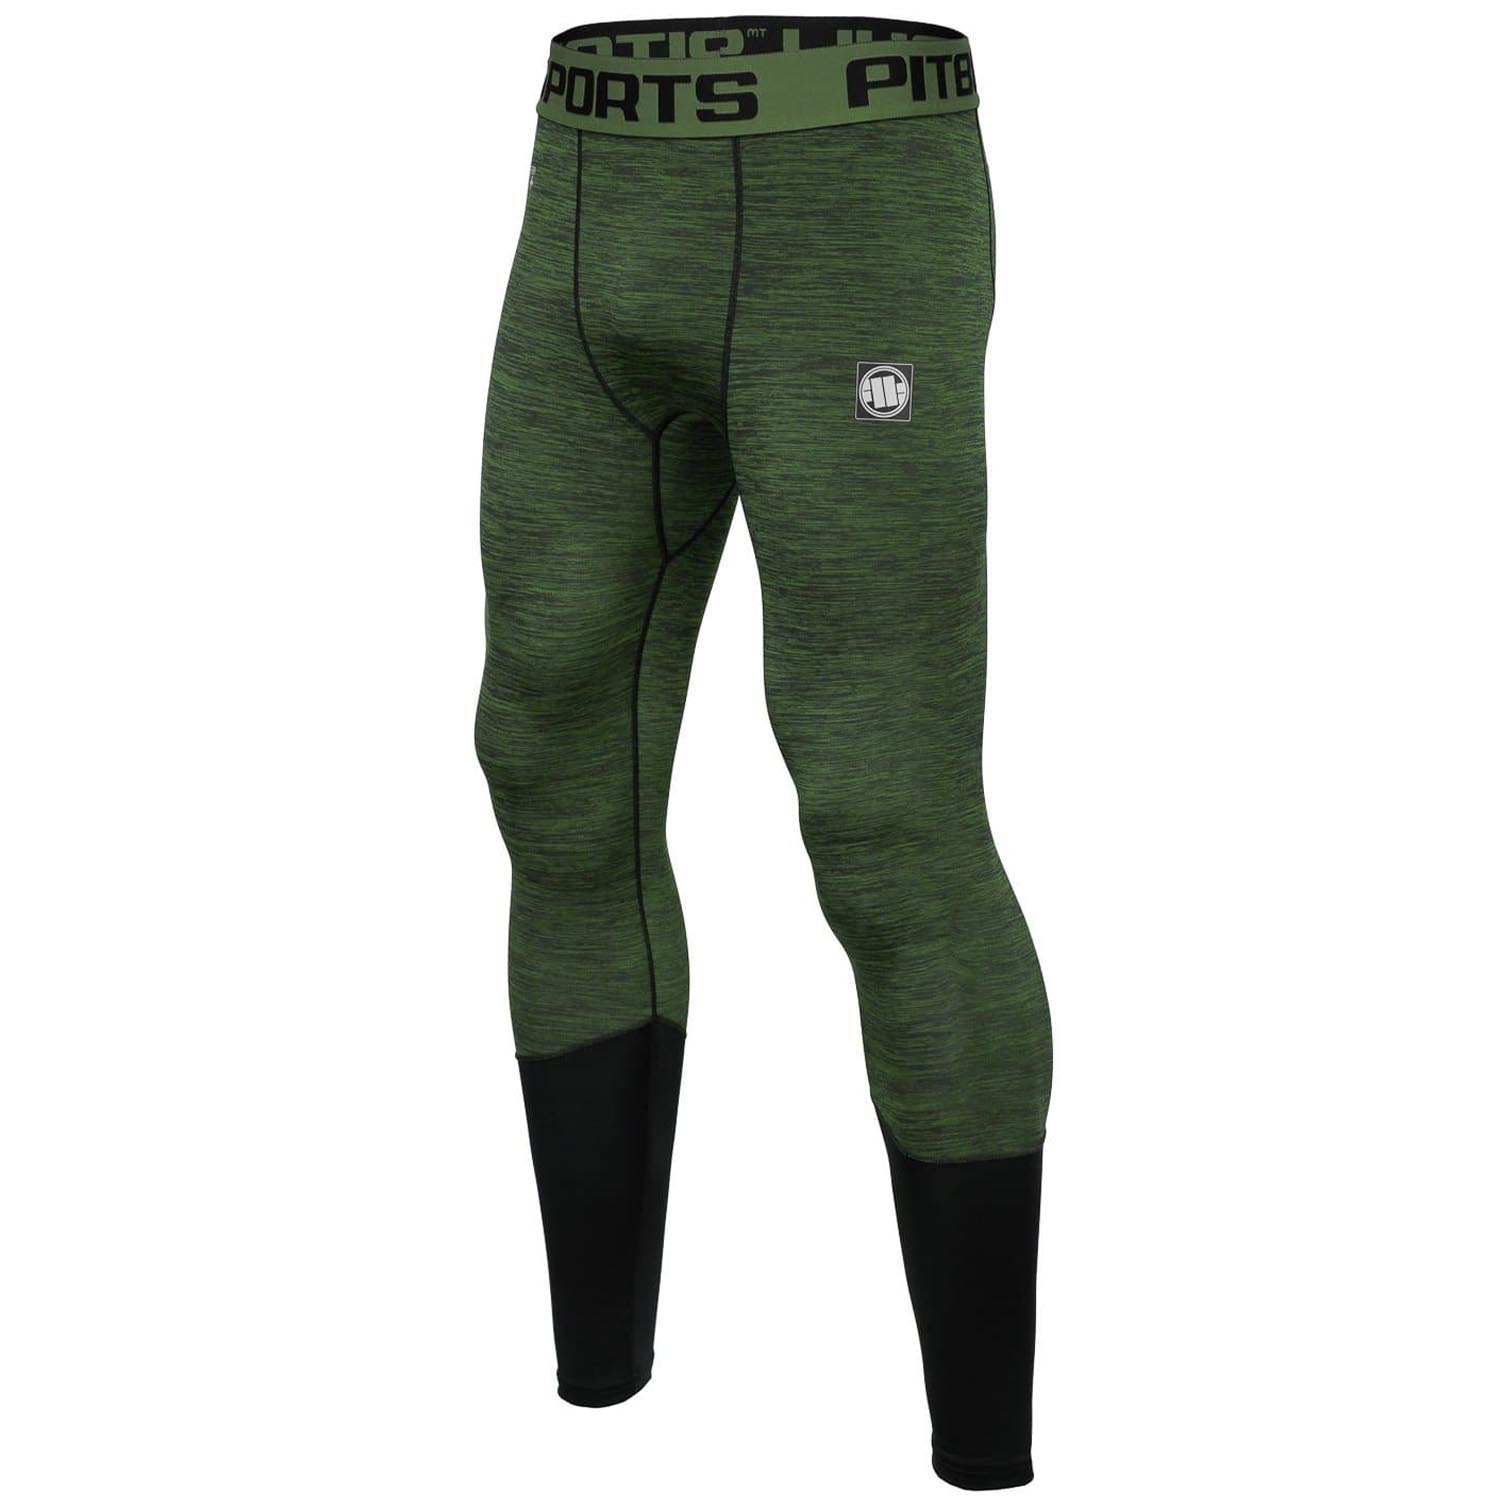 Pit Bull West Coast Compression Pants, Performance, Small Logo, dunkelgrün, S